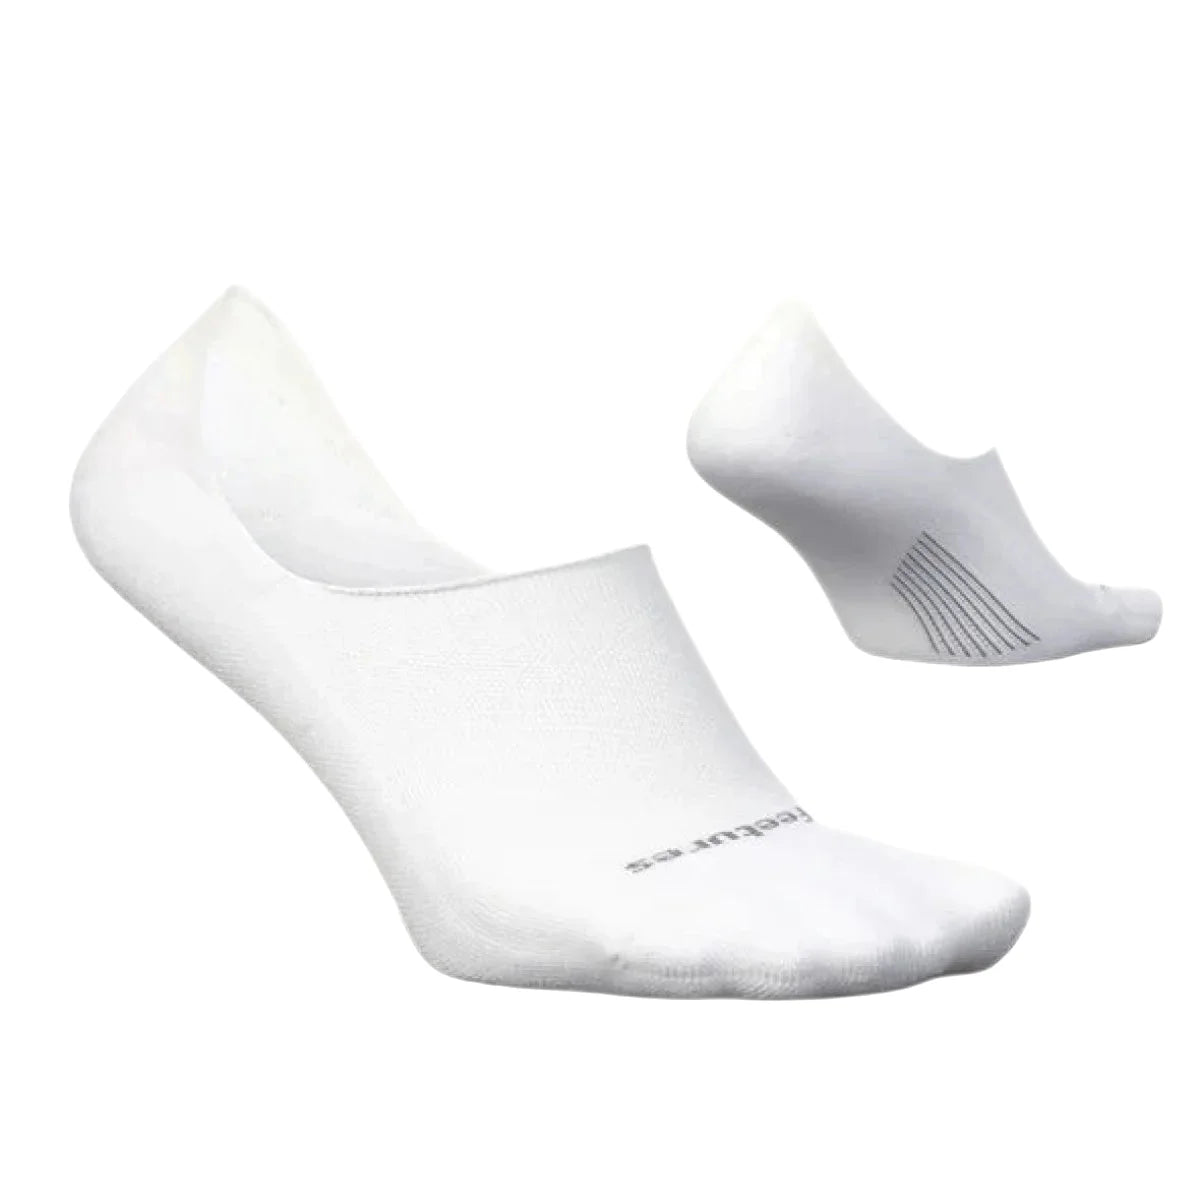 Unisex Feetures Elite Light Cushion Invisible Socks